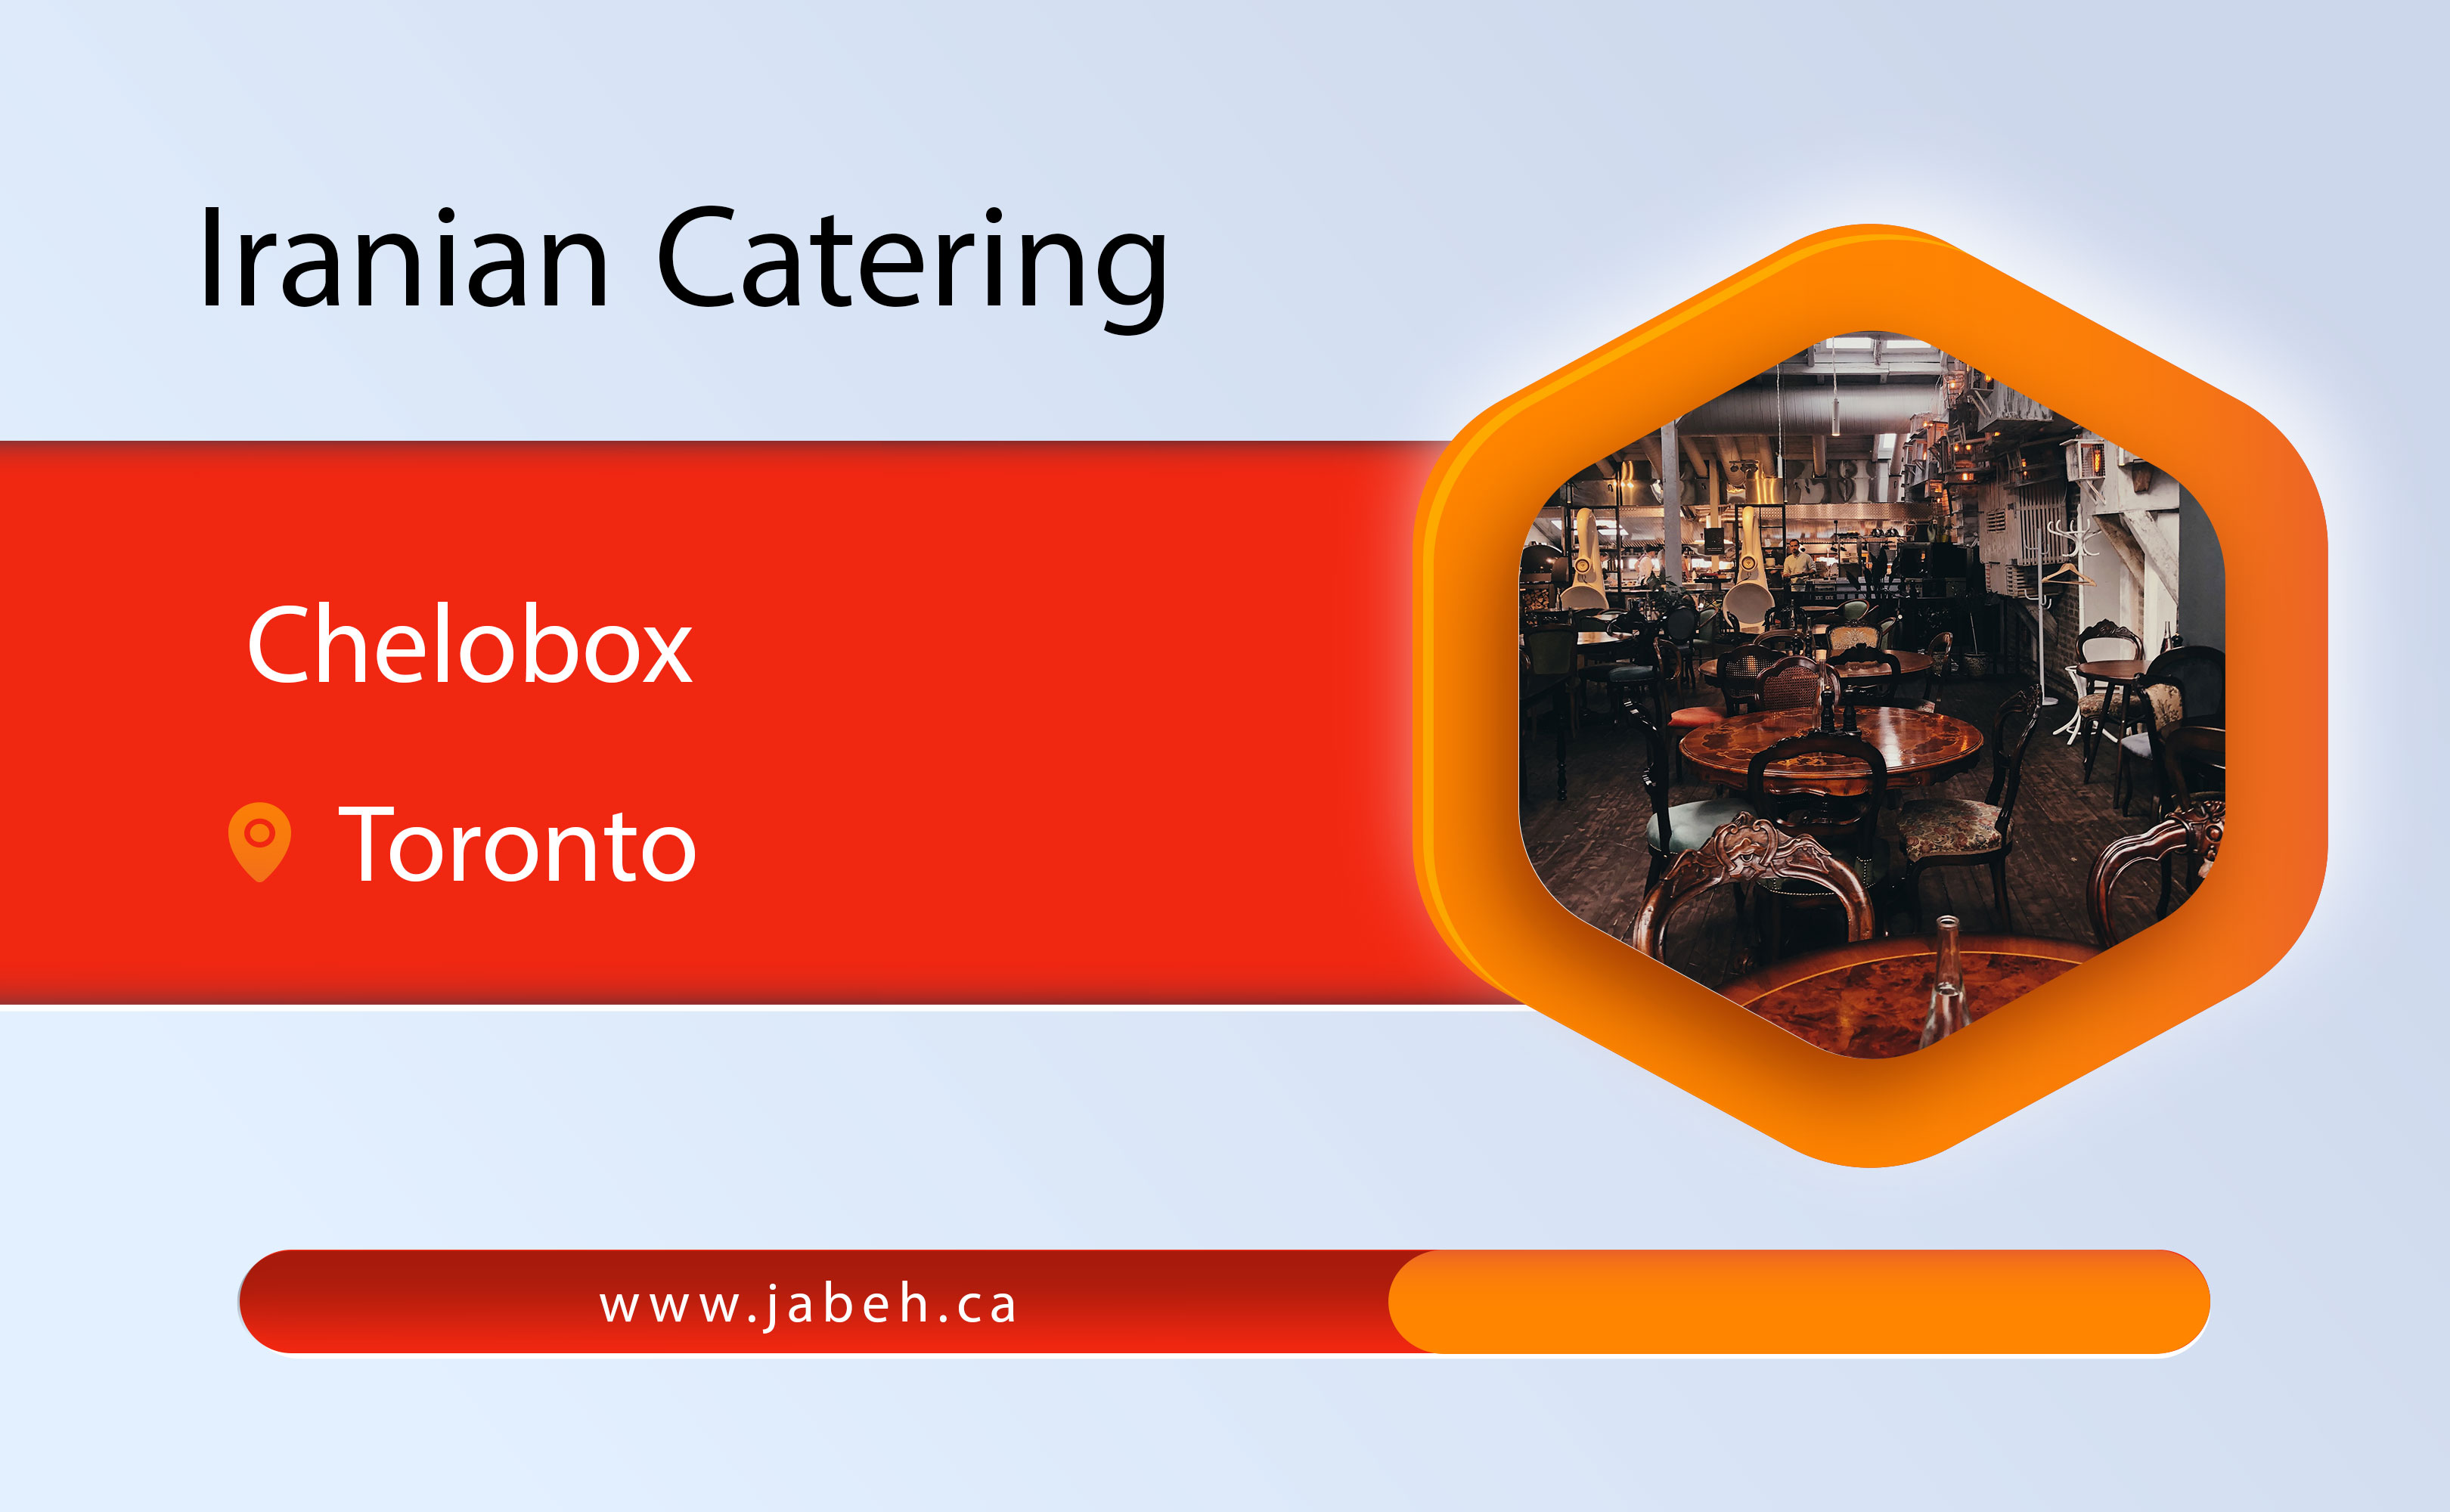 Chelobox Iranian catering in Toronto